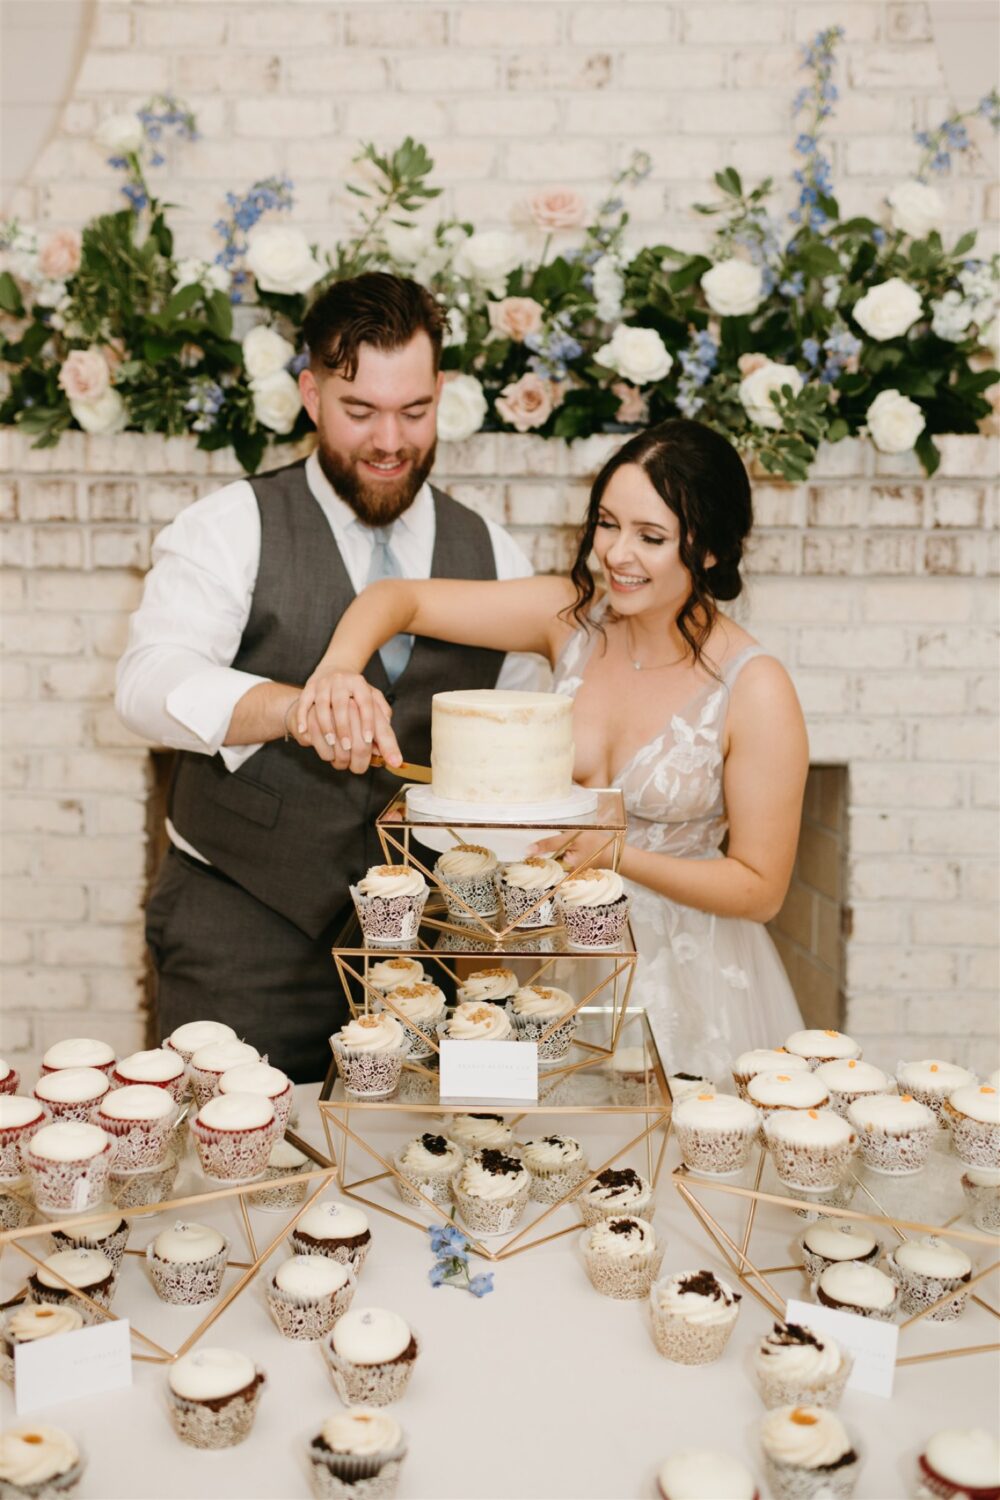 ivy rose barn bride and groom cutting wedding cake smiling wedding cupcakes